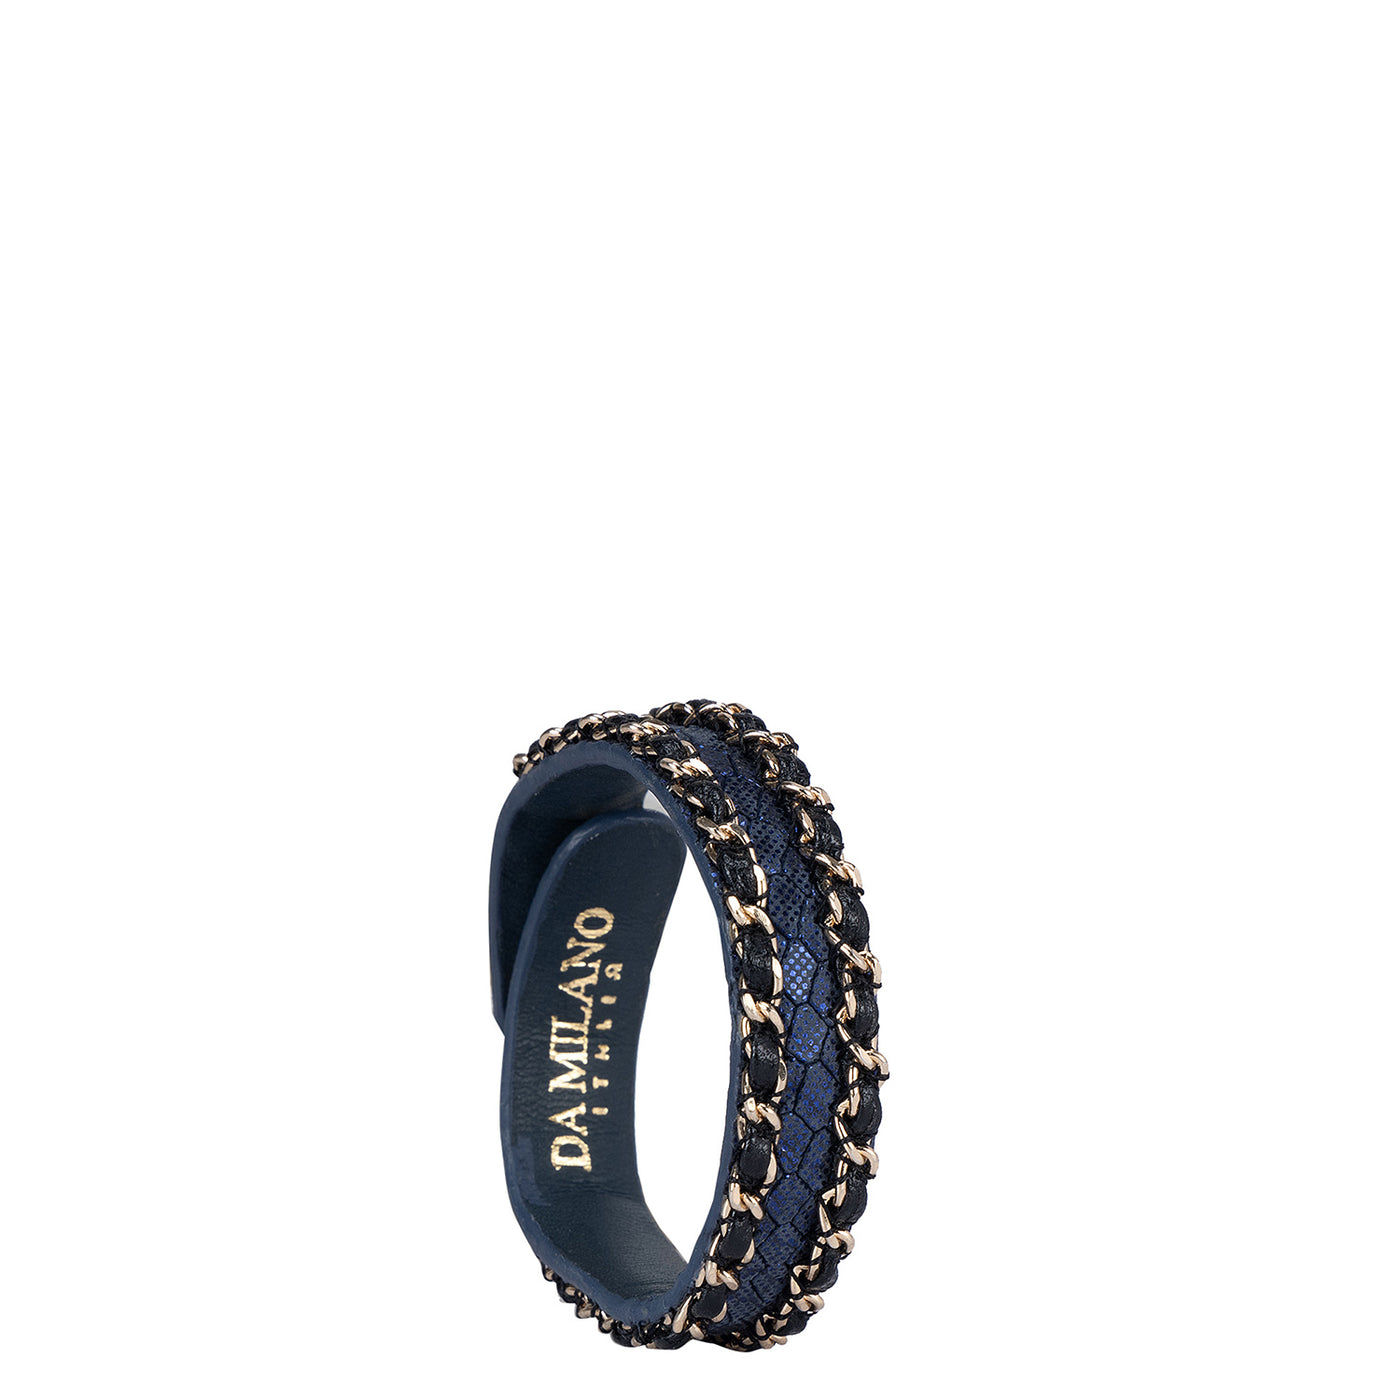 Snake Leather Wrist Band - Blue